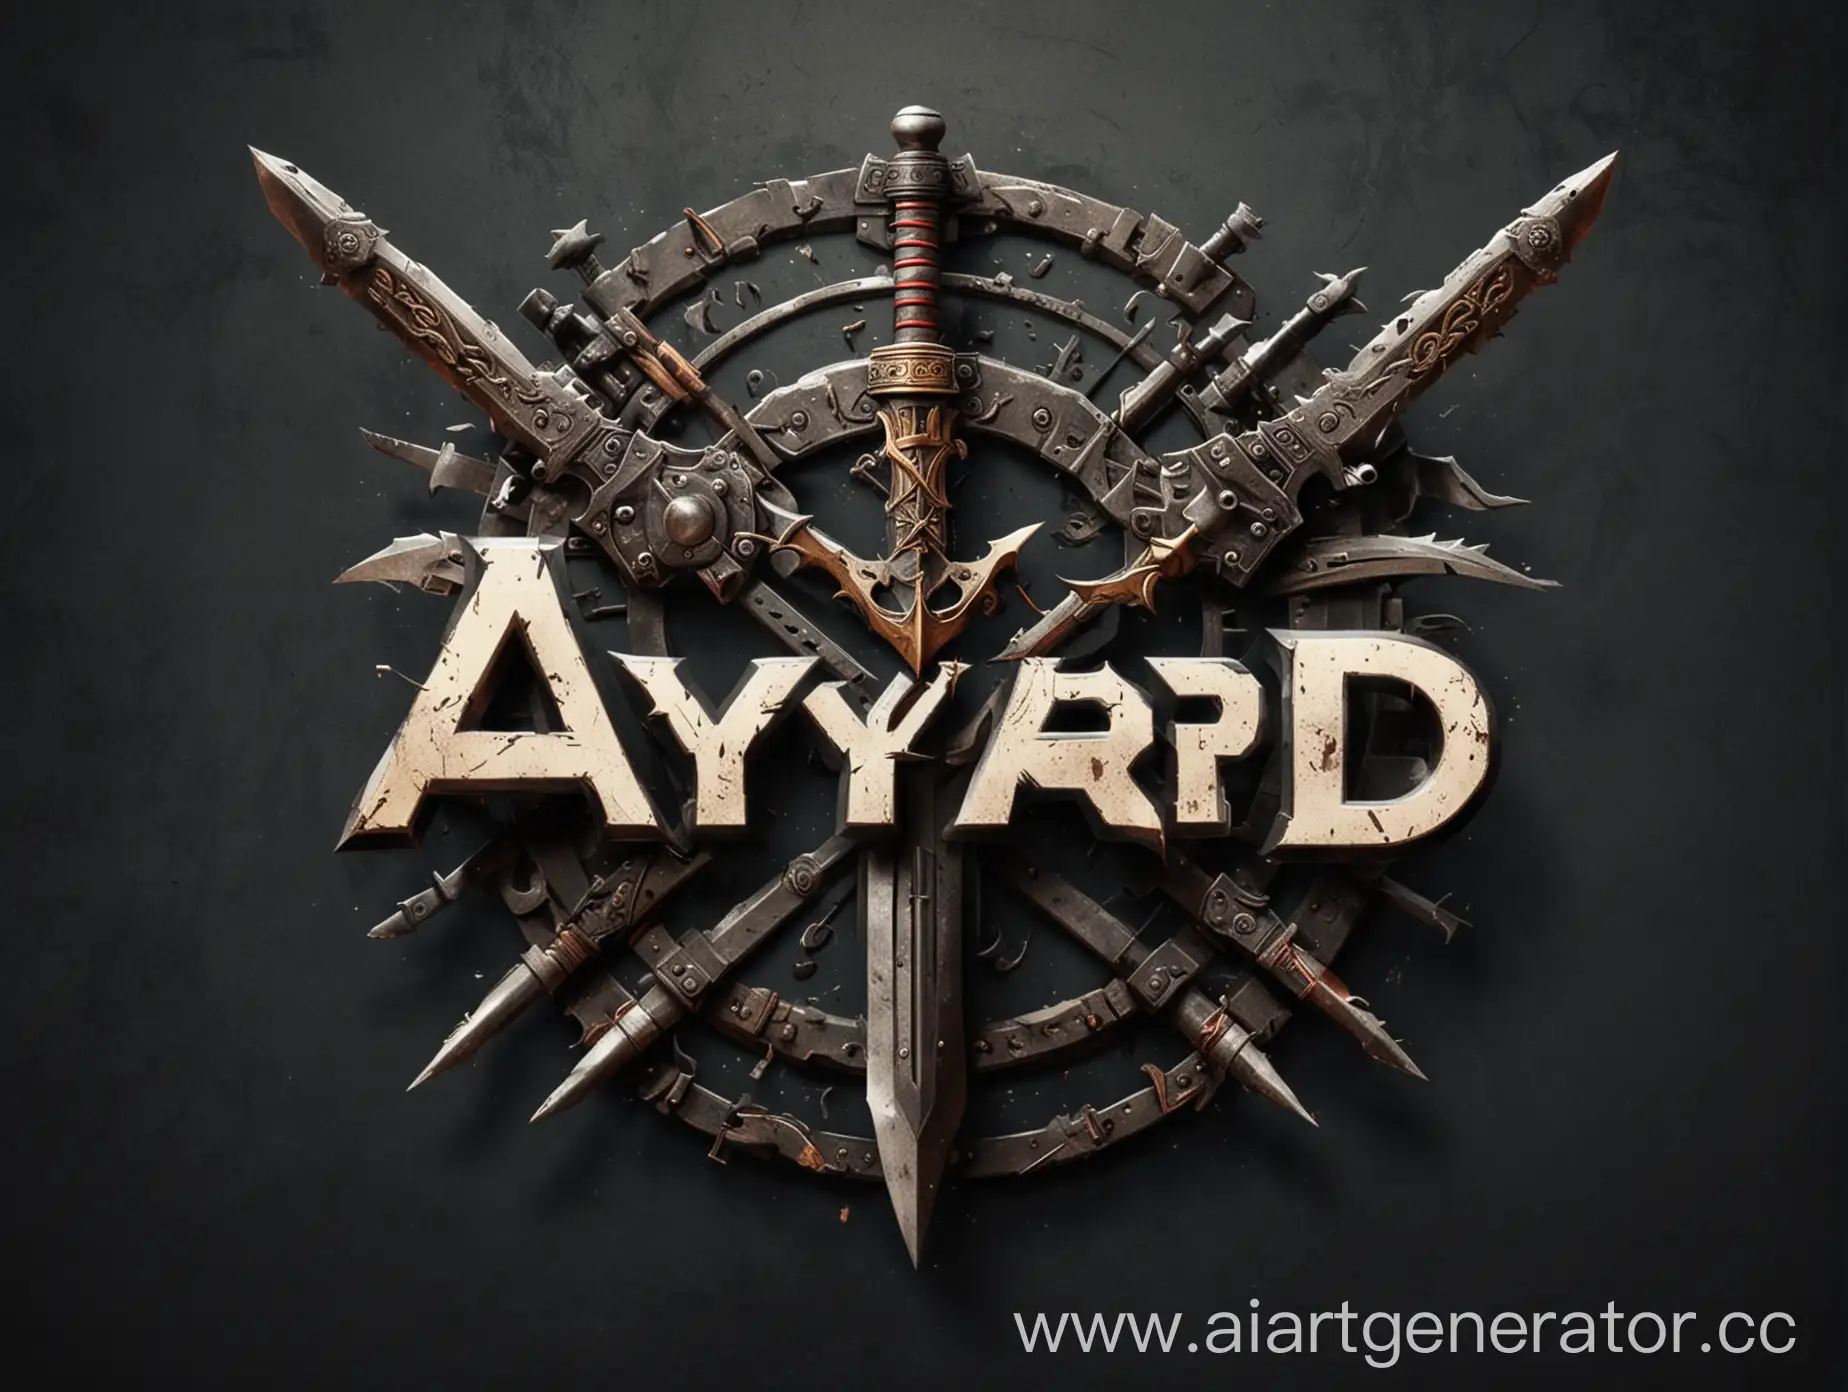 Dynamic-Logo-Design-Featuring-Ayard-Weapon